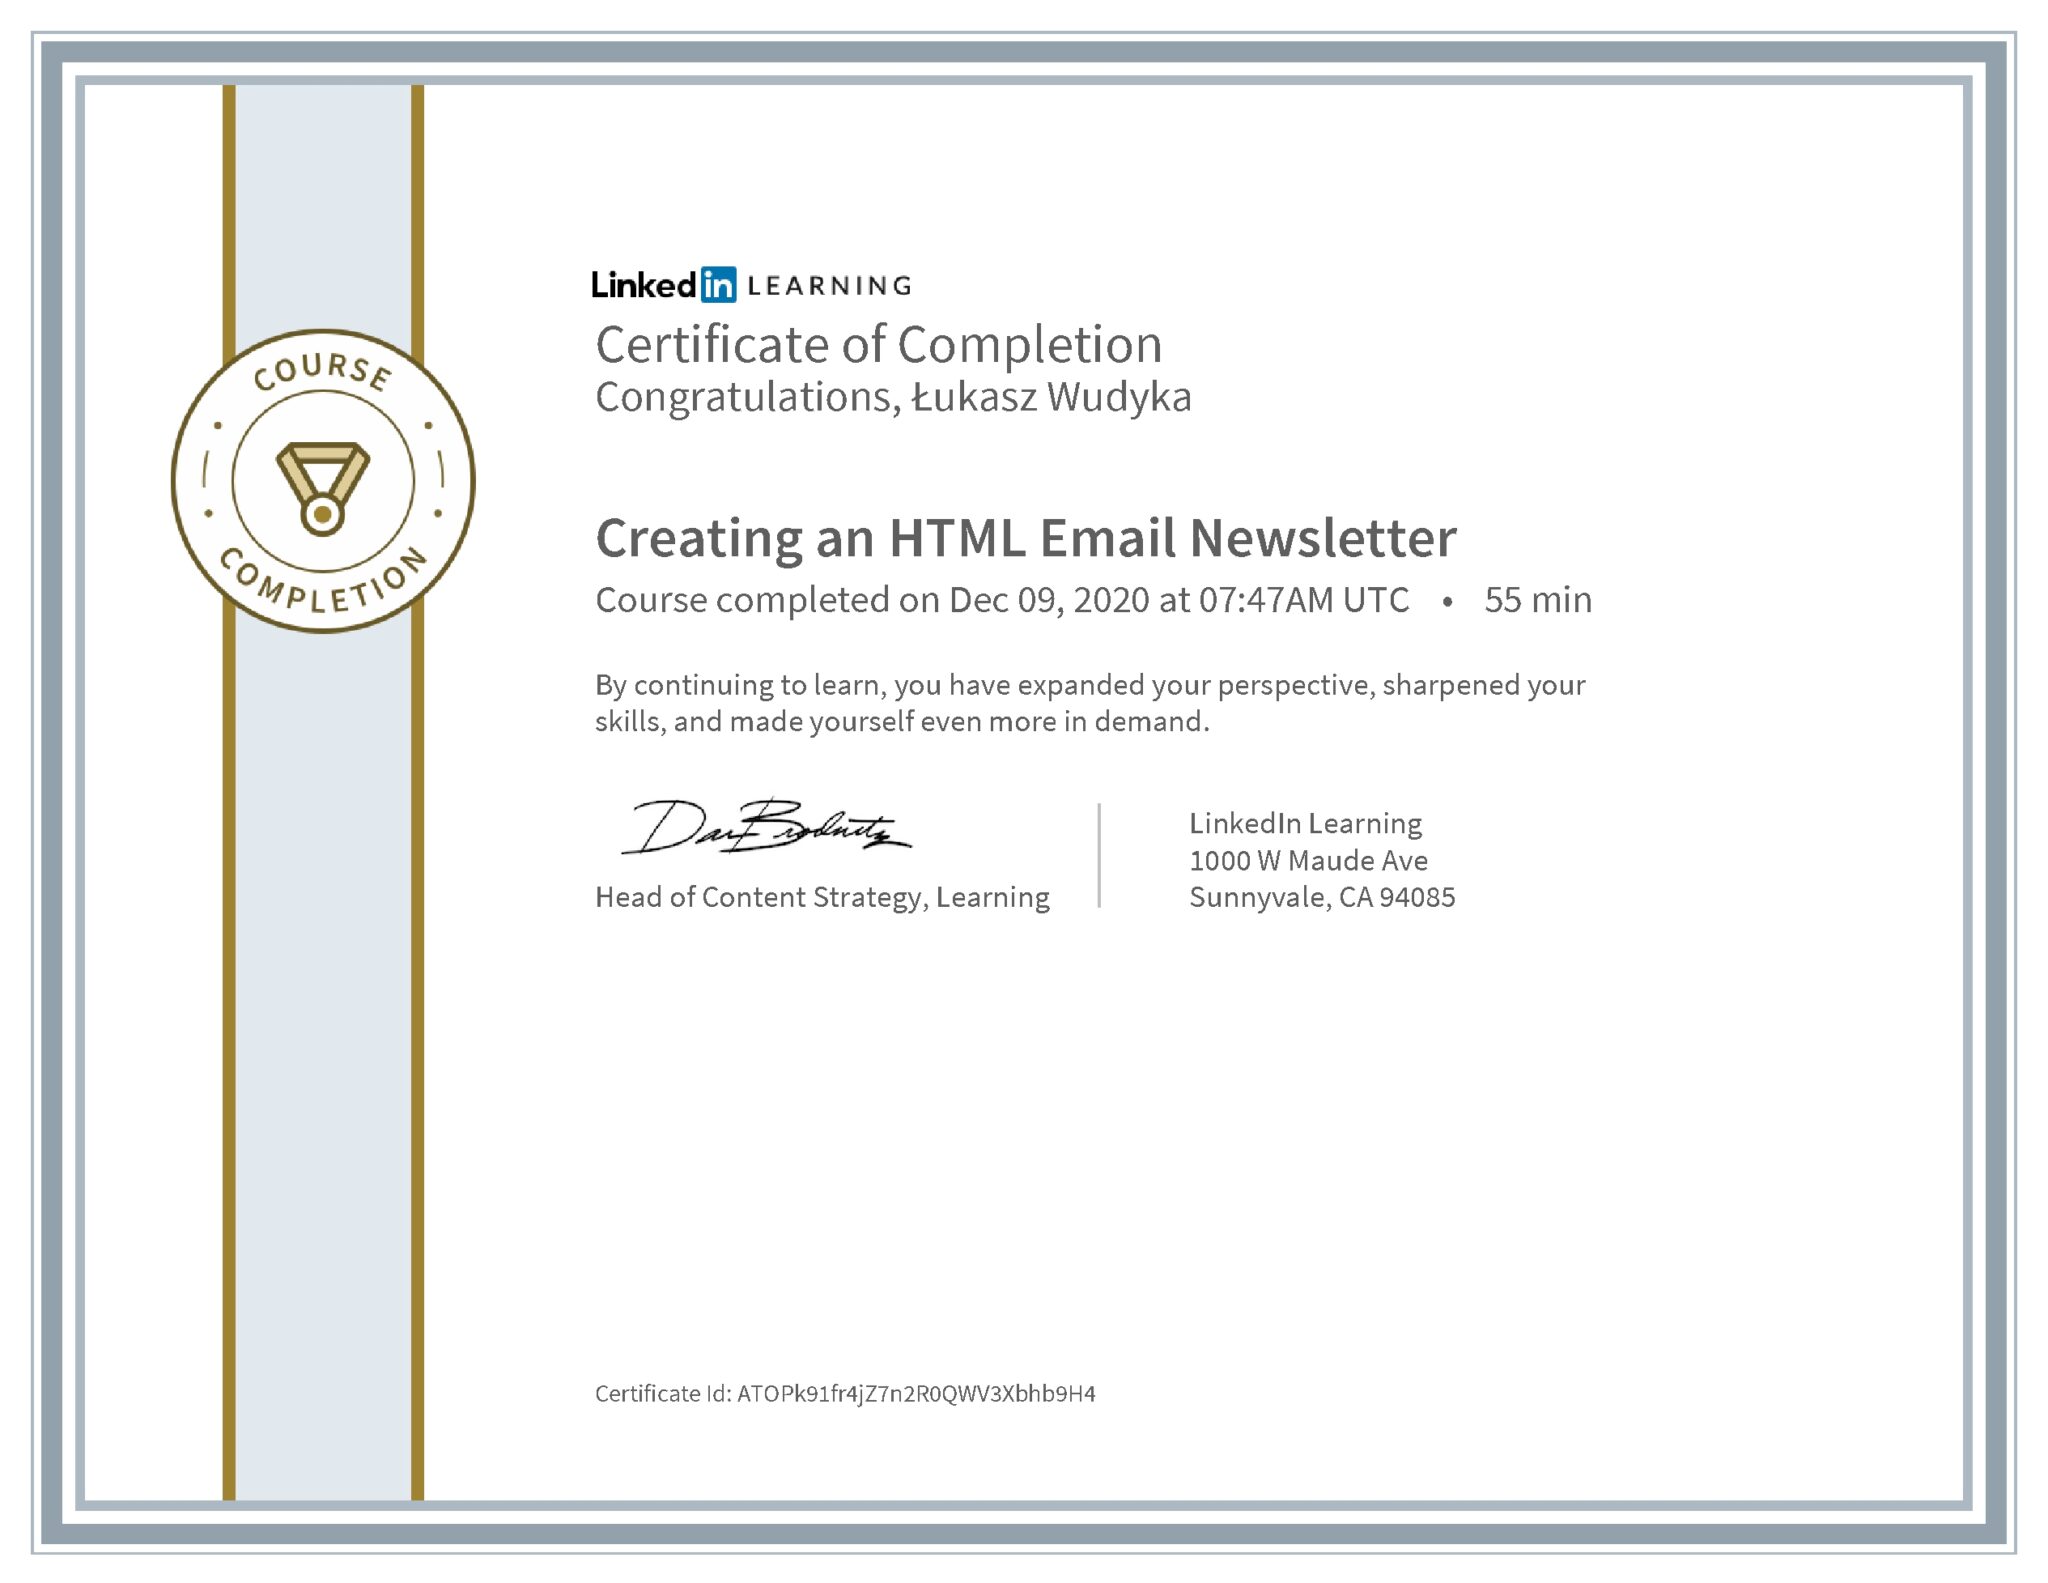 Łukasz Wudyka certyfikat LinkedIn Creating an HTML Email Newsletter